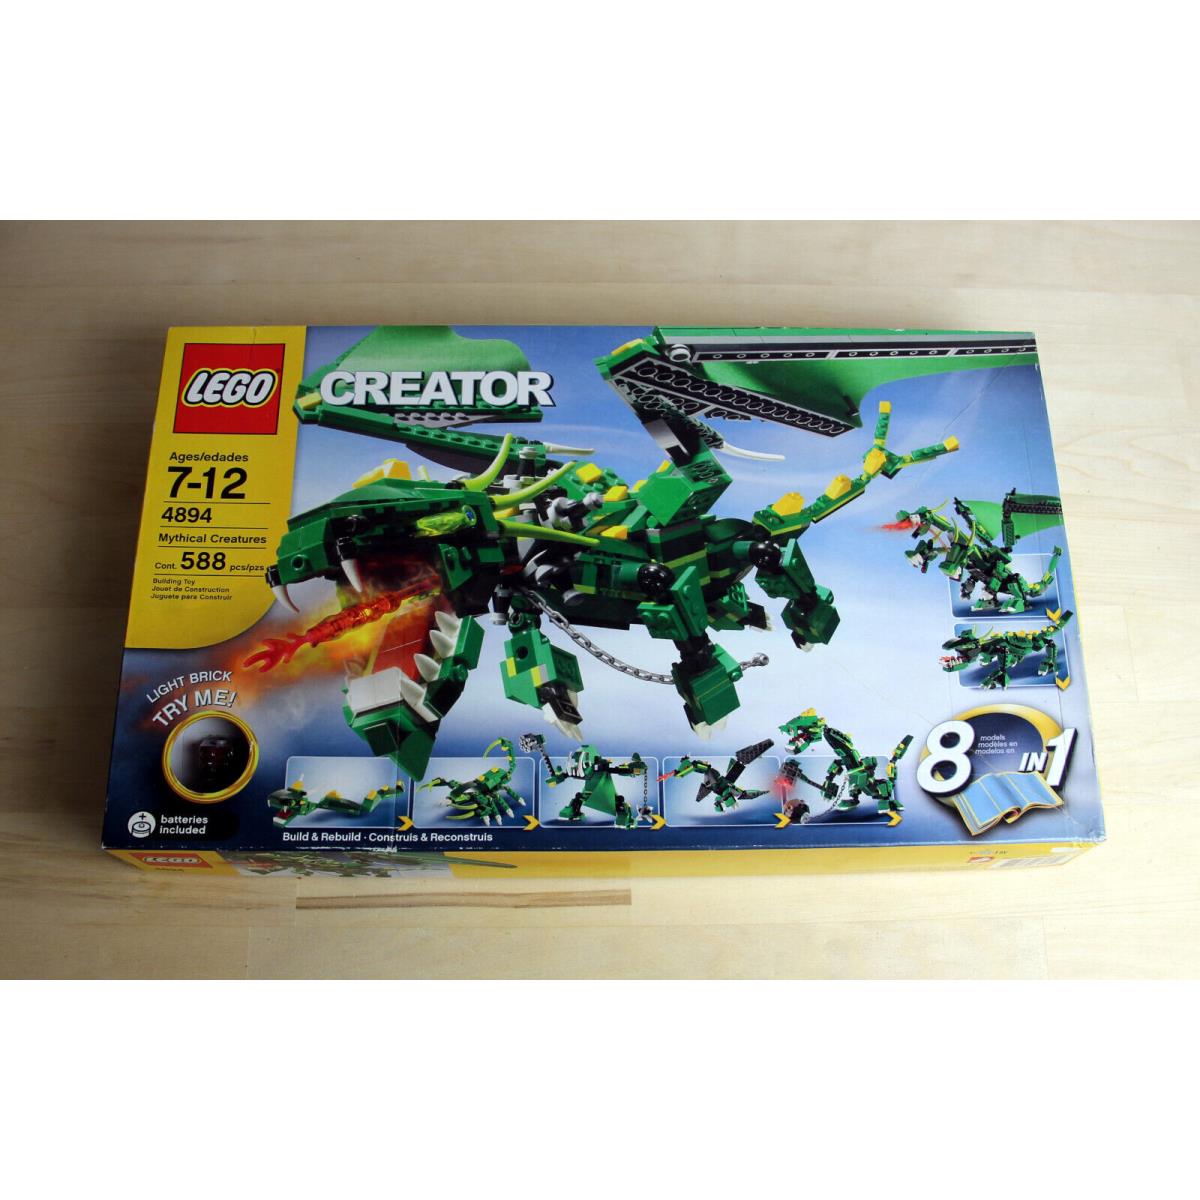 Lego Creator 4894 Mythical Creatures 588 Pieces